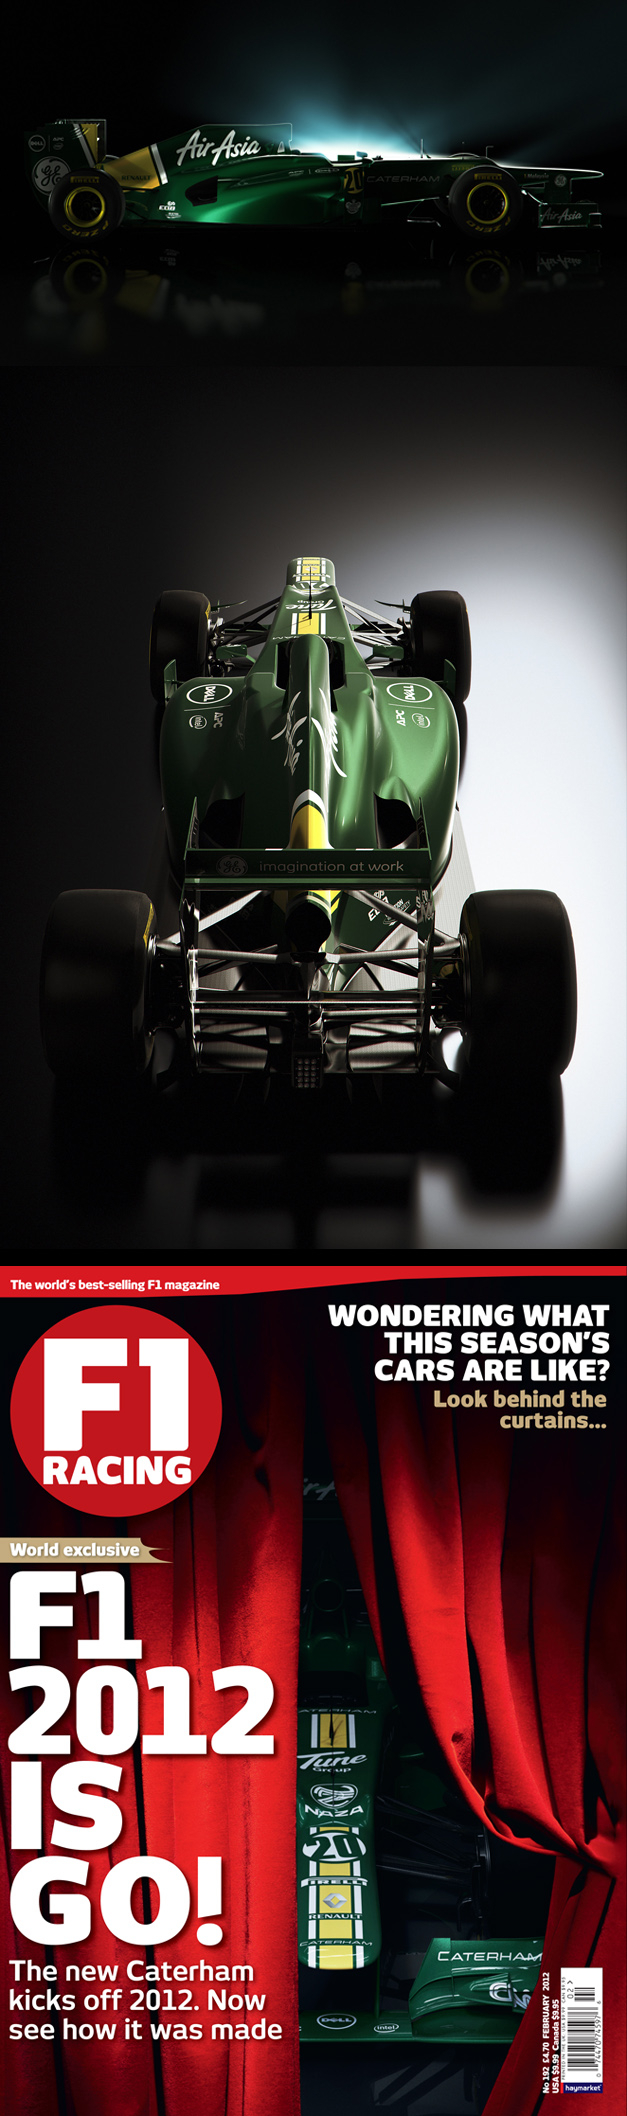 Peter Crowther / Caterham F1 / F1 Magazine